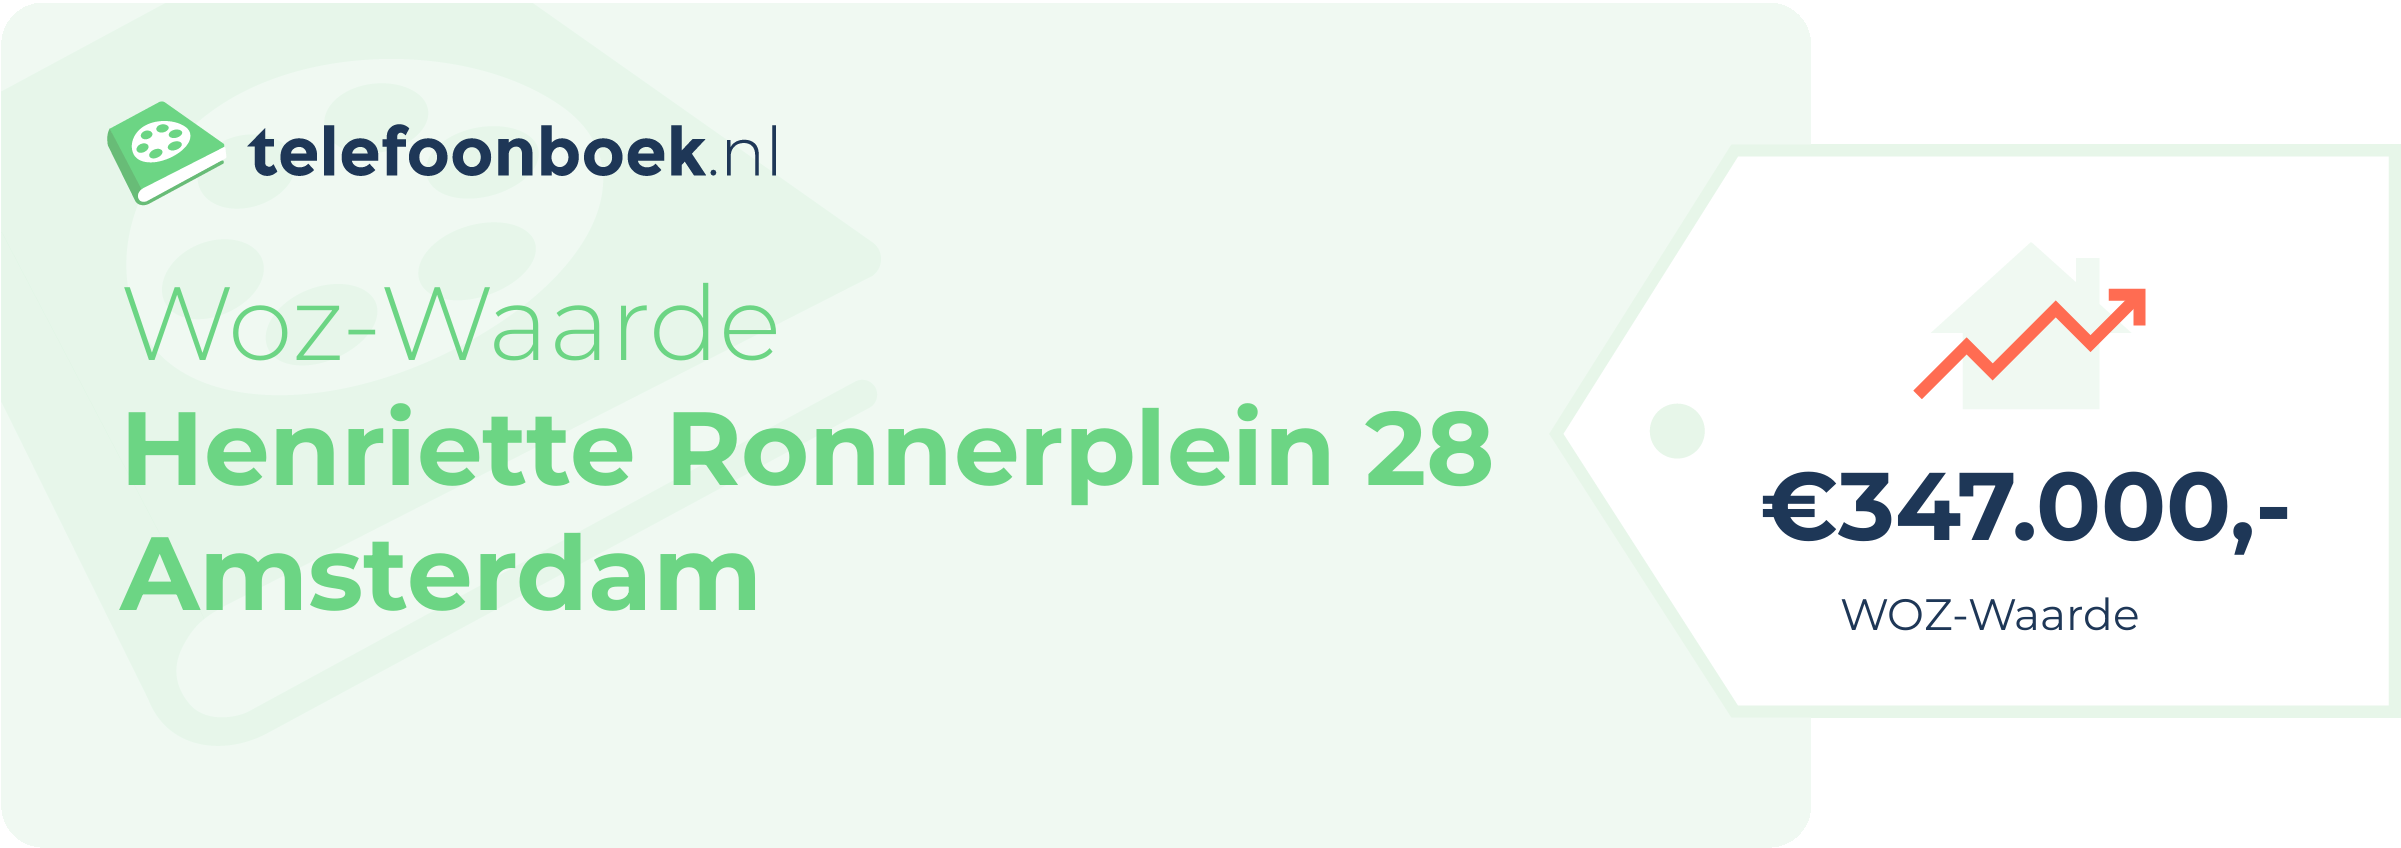 WOZ-waarde Henriette Ronnerplein 28 Amsterdam